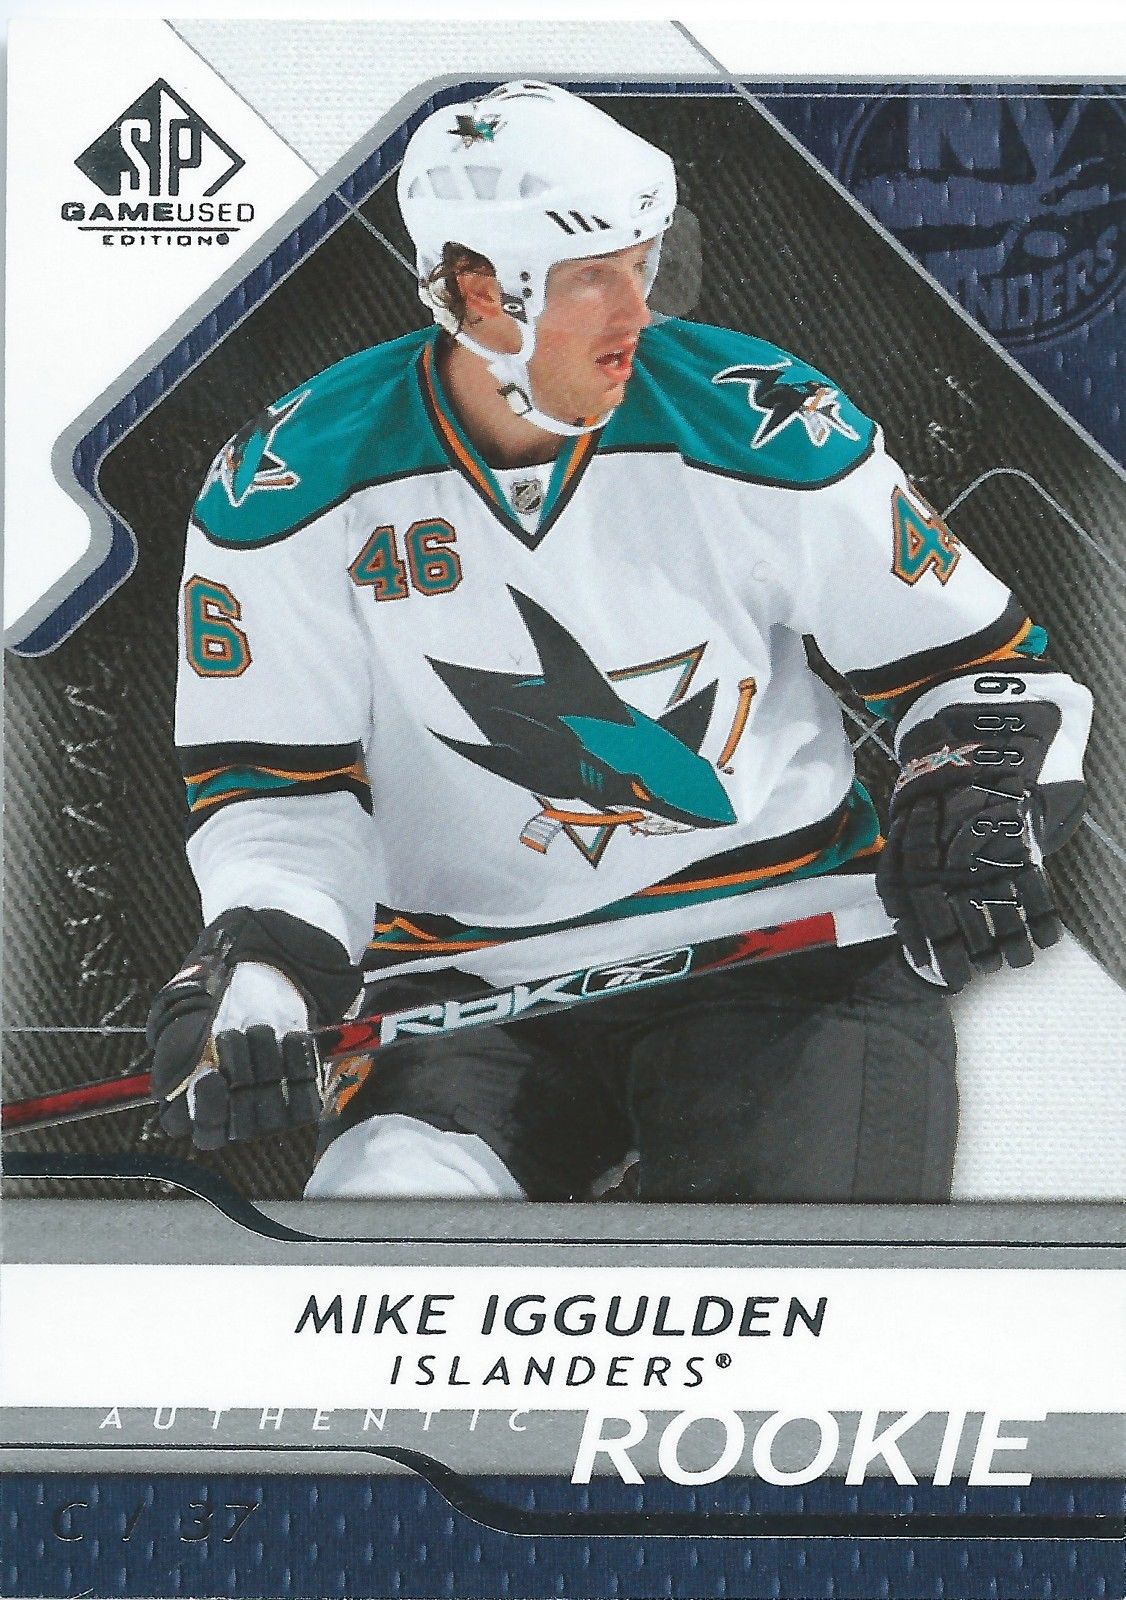  2008-09 SP Game Used MIKE IGGULDEN Rookie /999 Upper Deck RC NHL 00993  Image 1